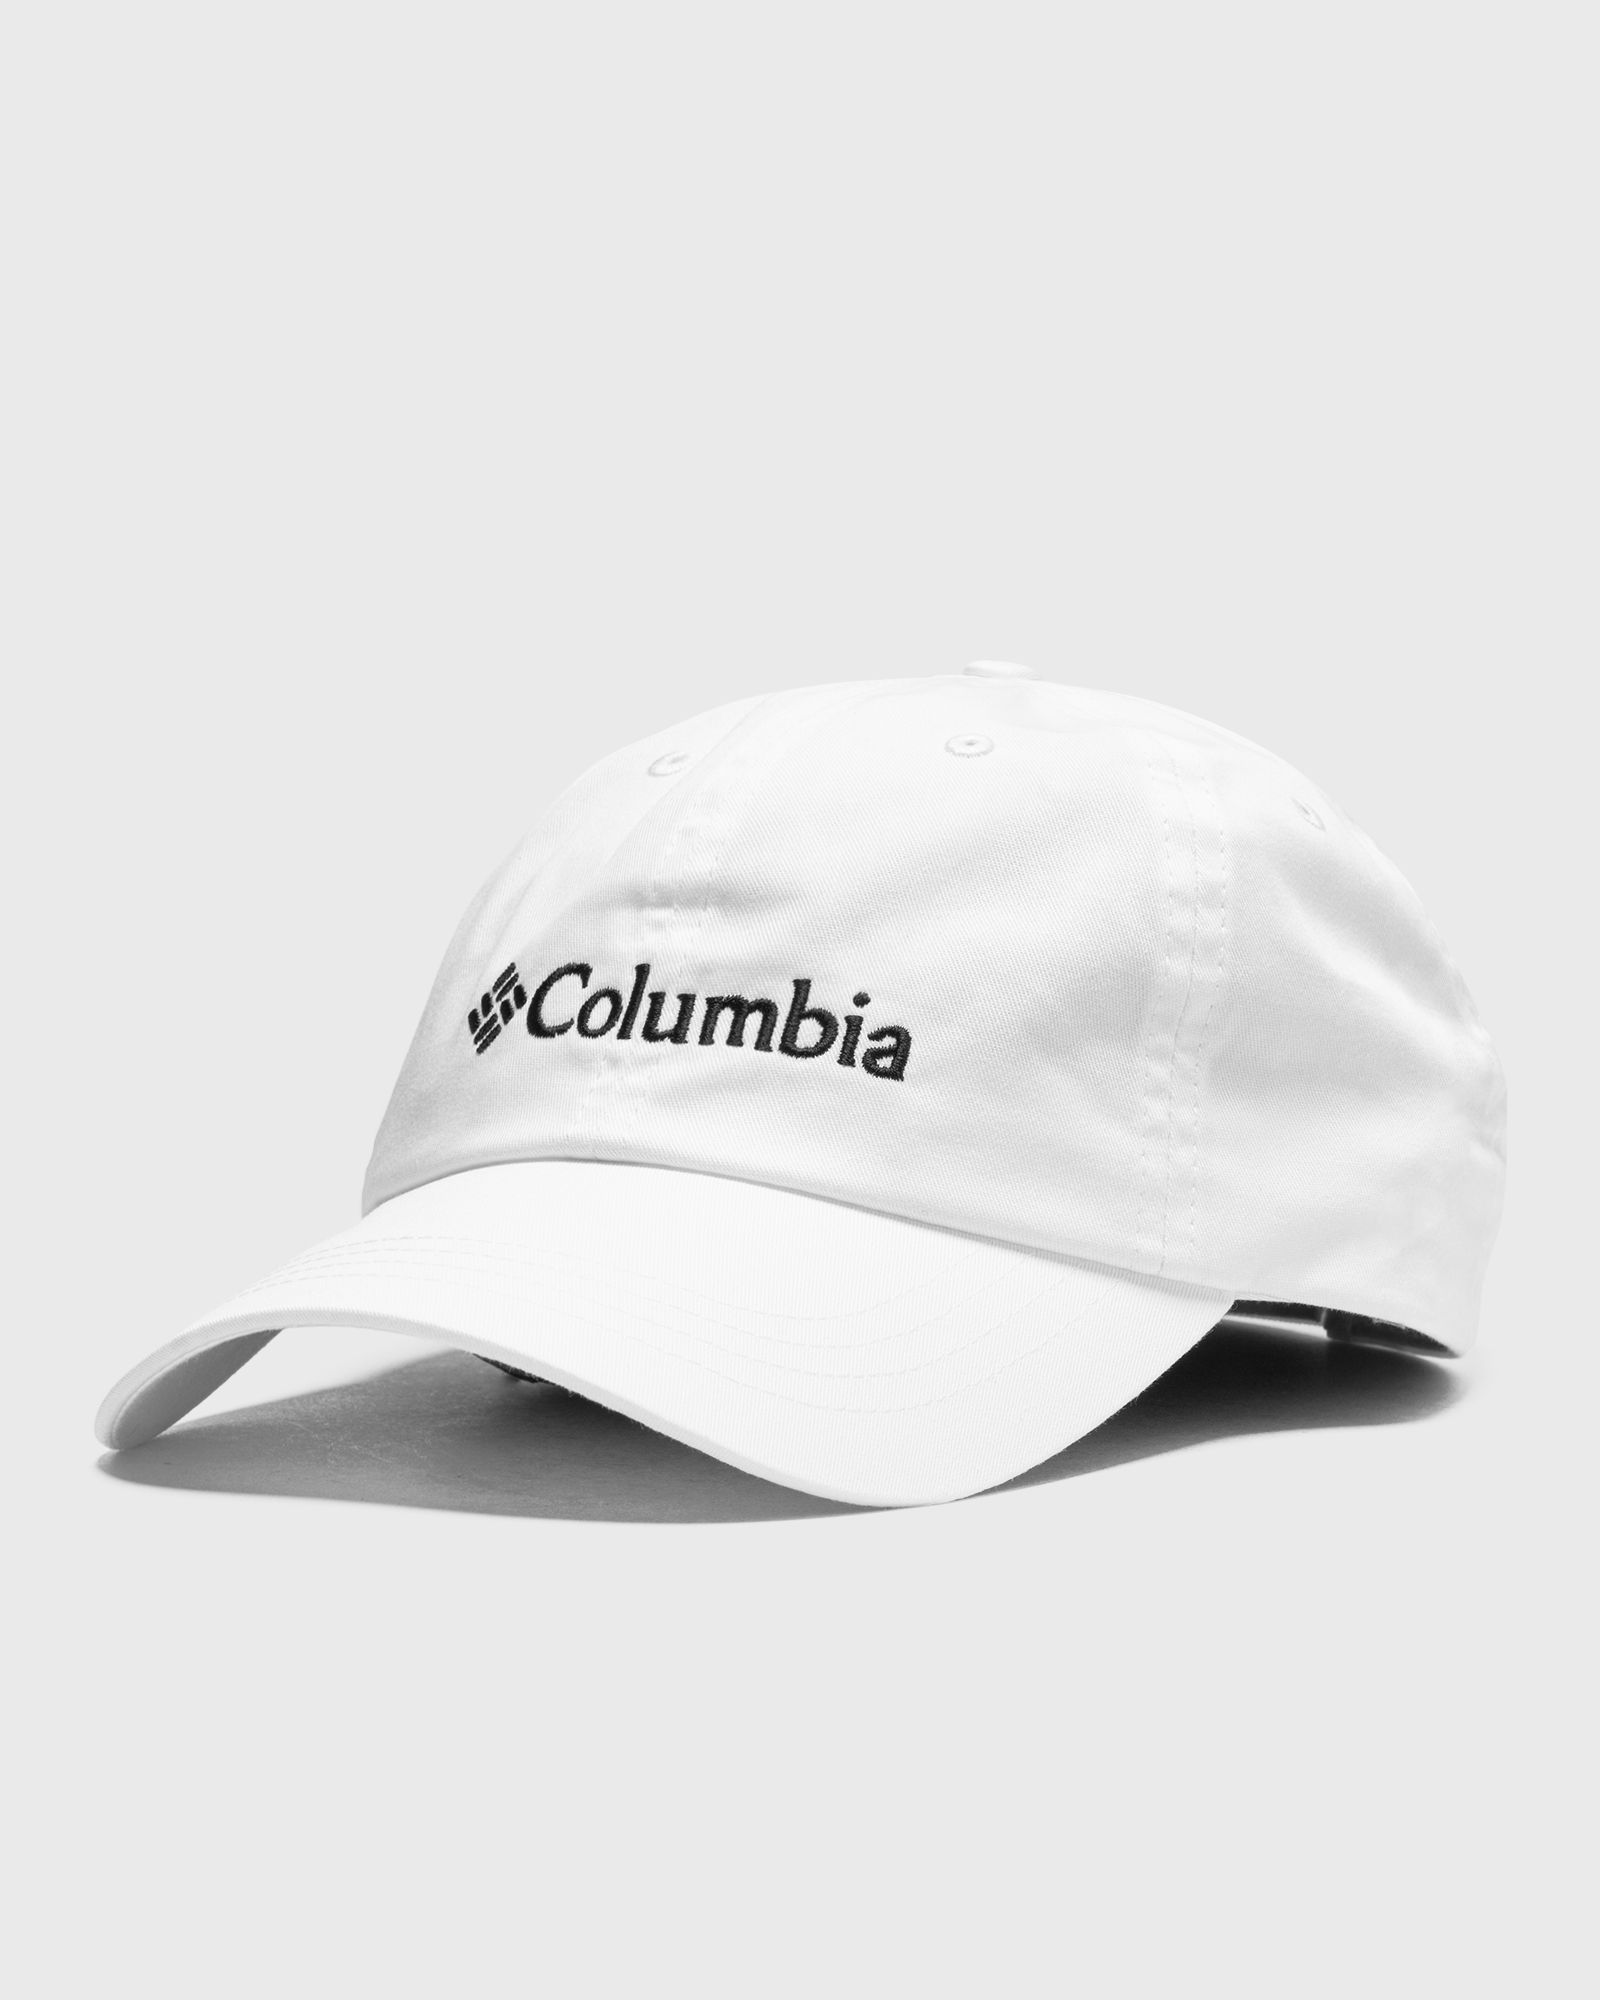 Columbia - roc ii ball cap men caps white in größe:one size